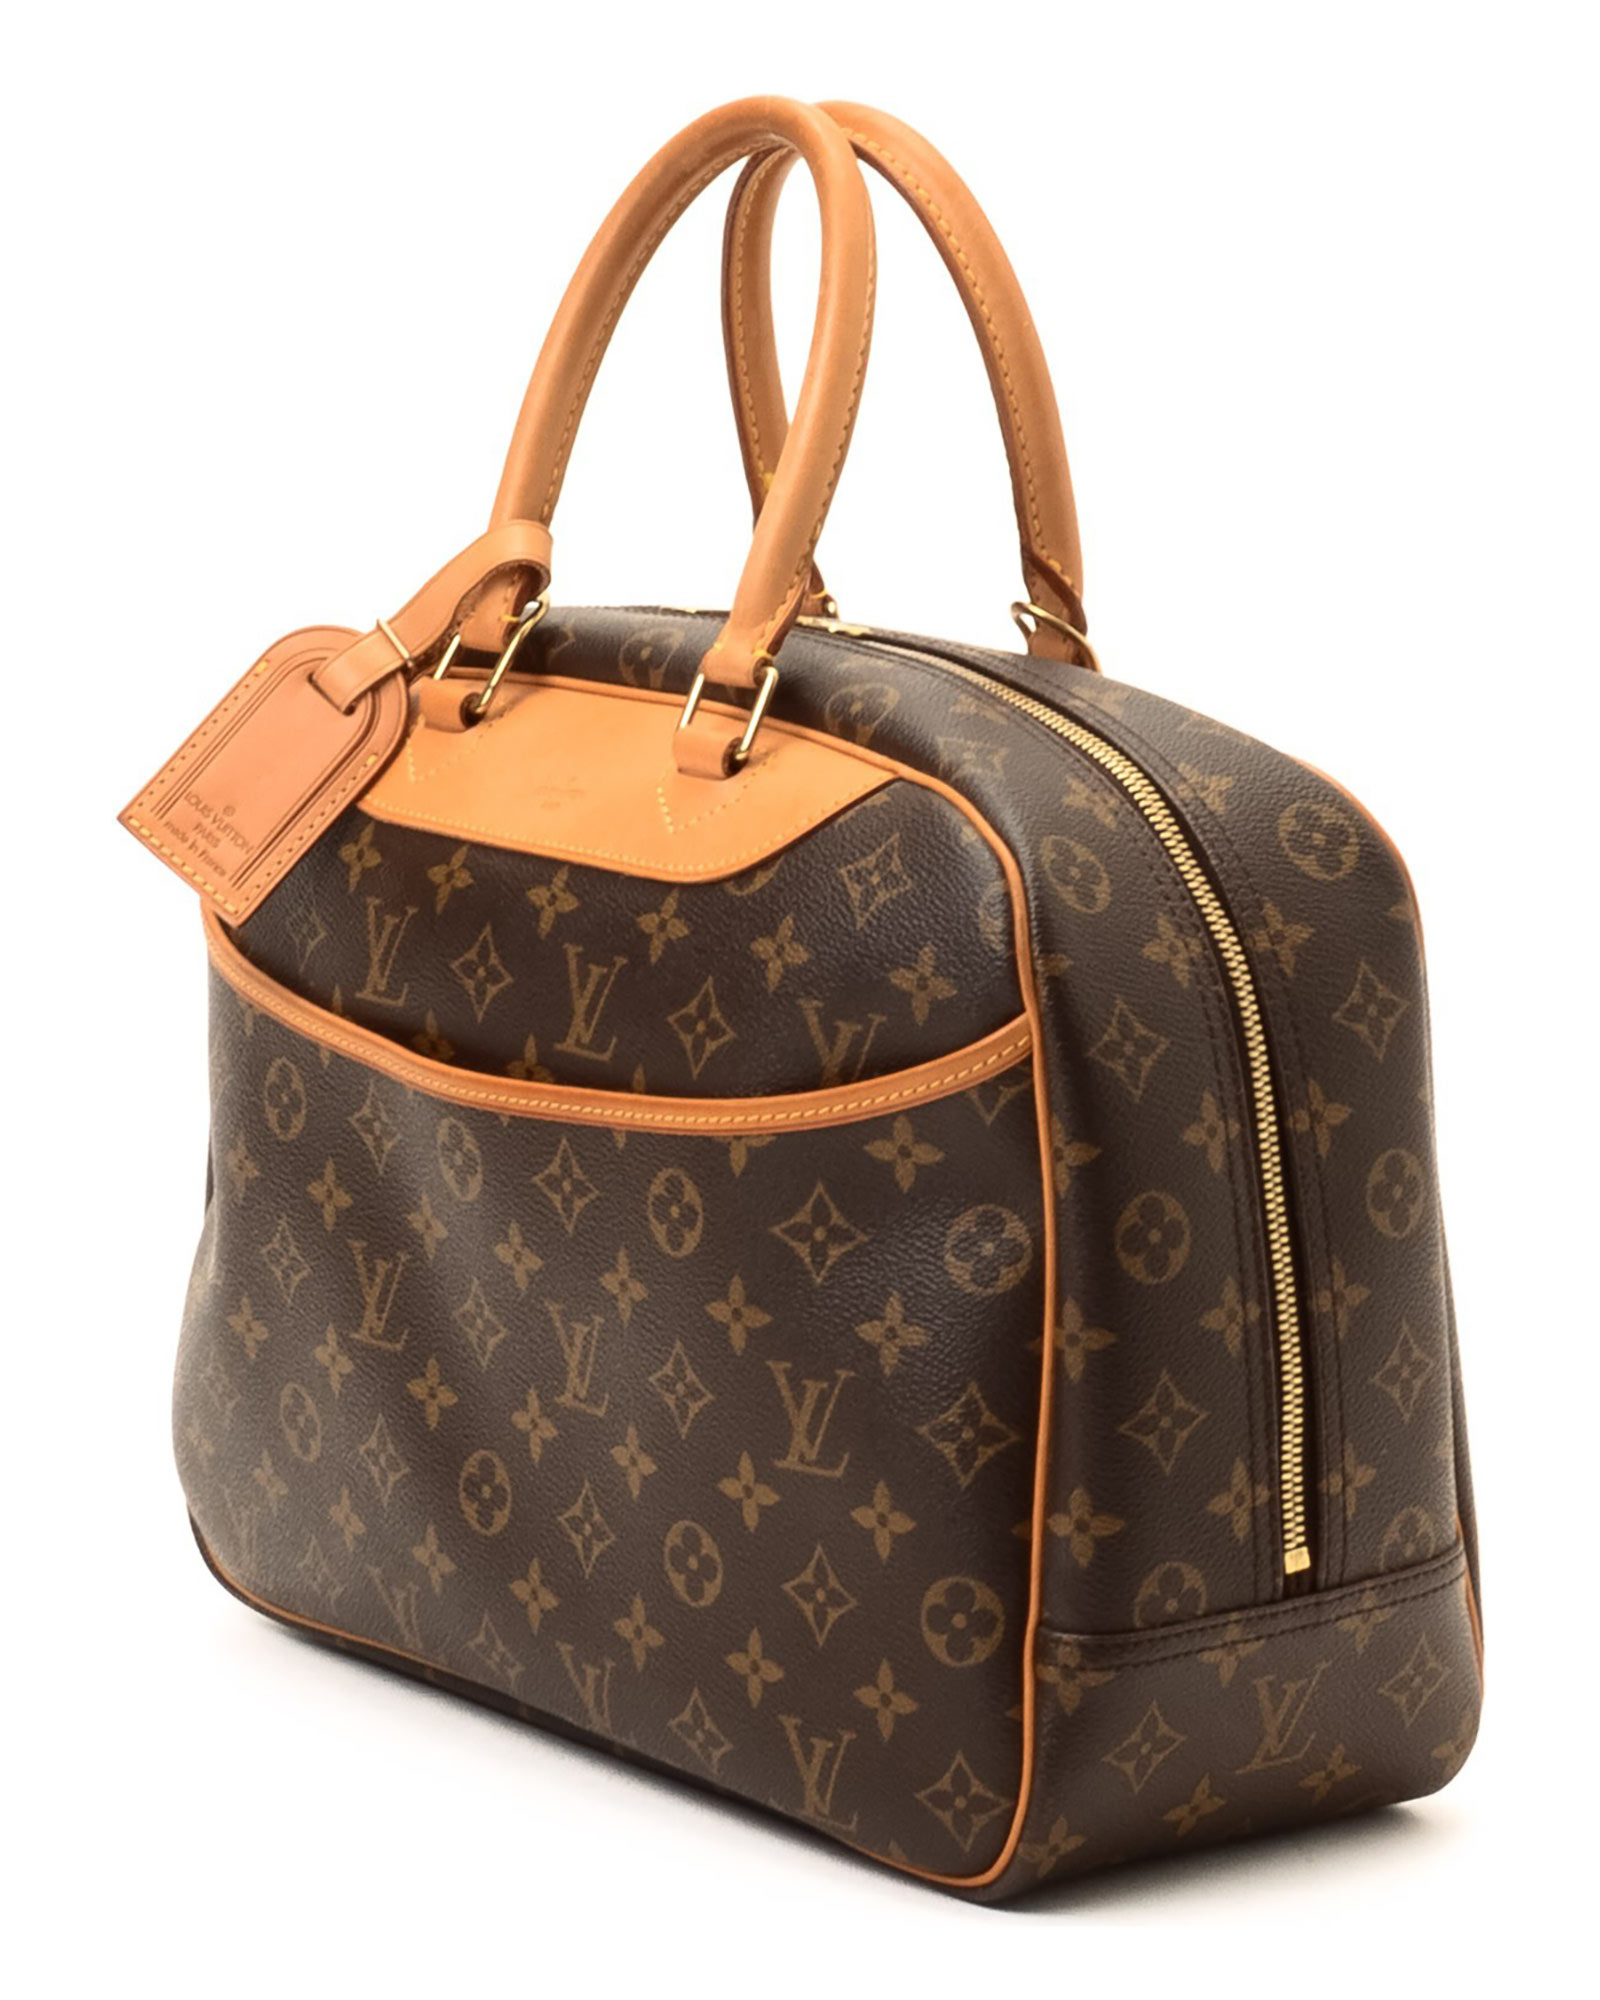 Vintage Louis Vuitton Handbags Uk | Jaguar Clubs of North America